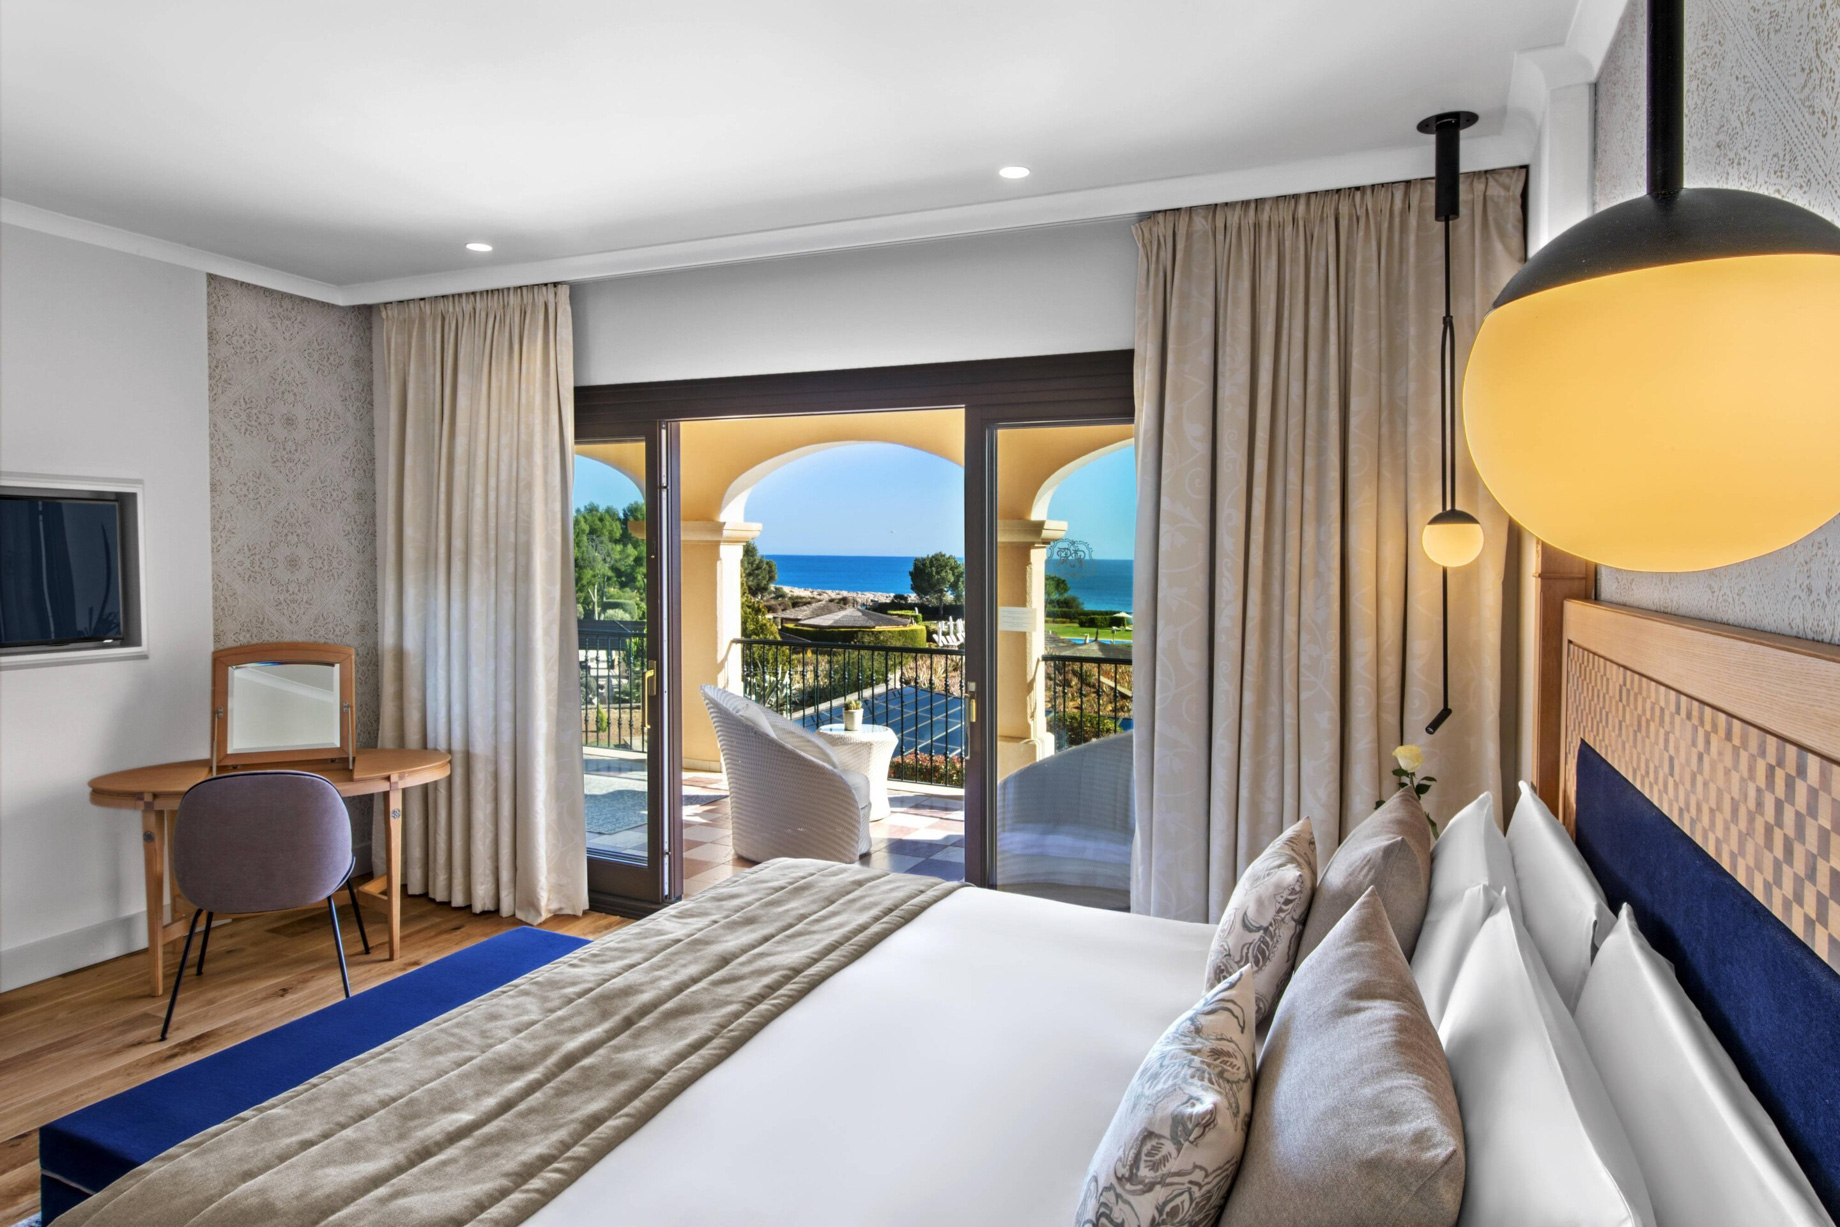 The St. Regis Mardavall Mallorca Resort – Palma de Mallorca, Spain – Ocean Two Suite Bedroom View